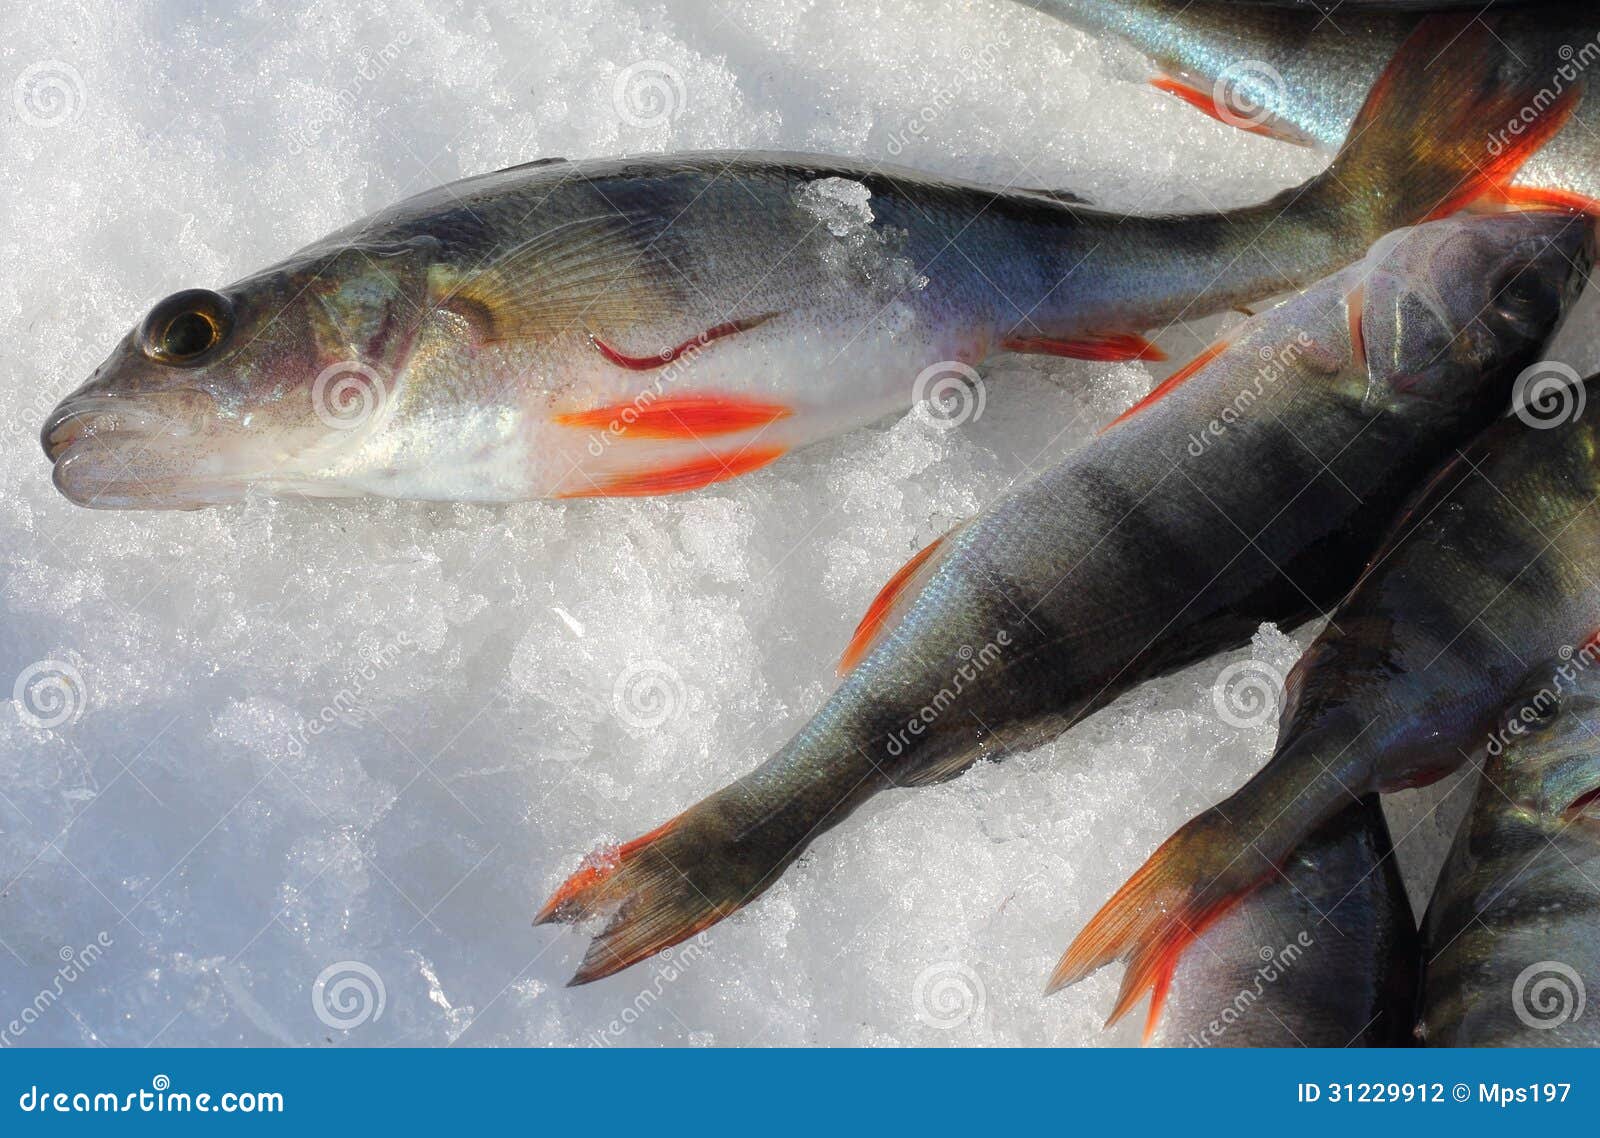 Fish leech on a perch stock photo. Image of catch, perca - 31229912